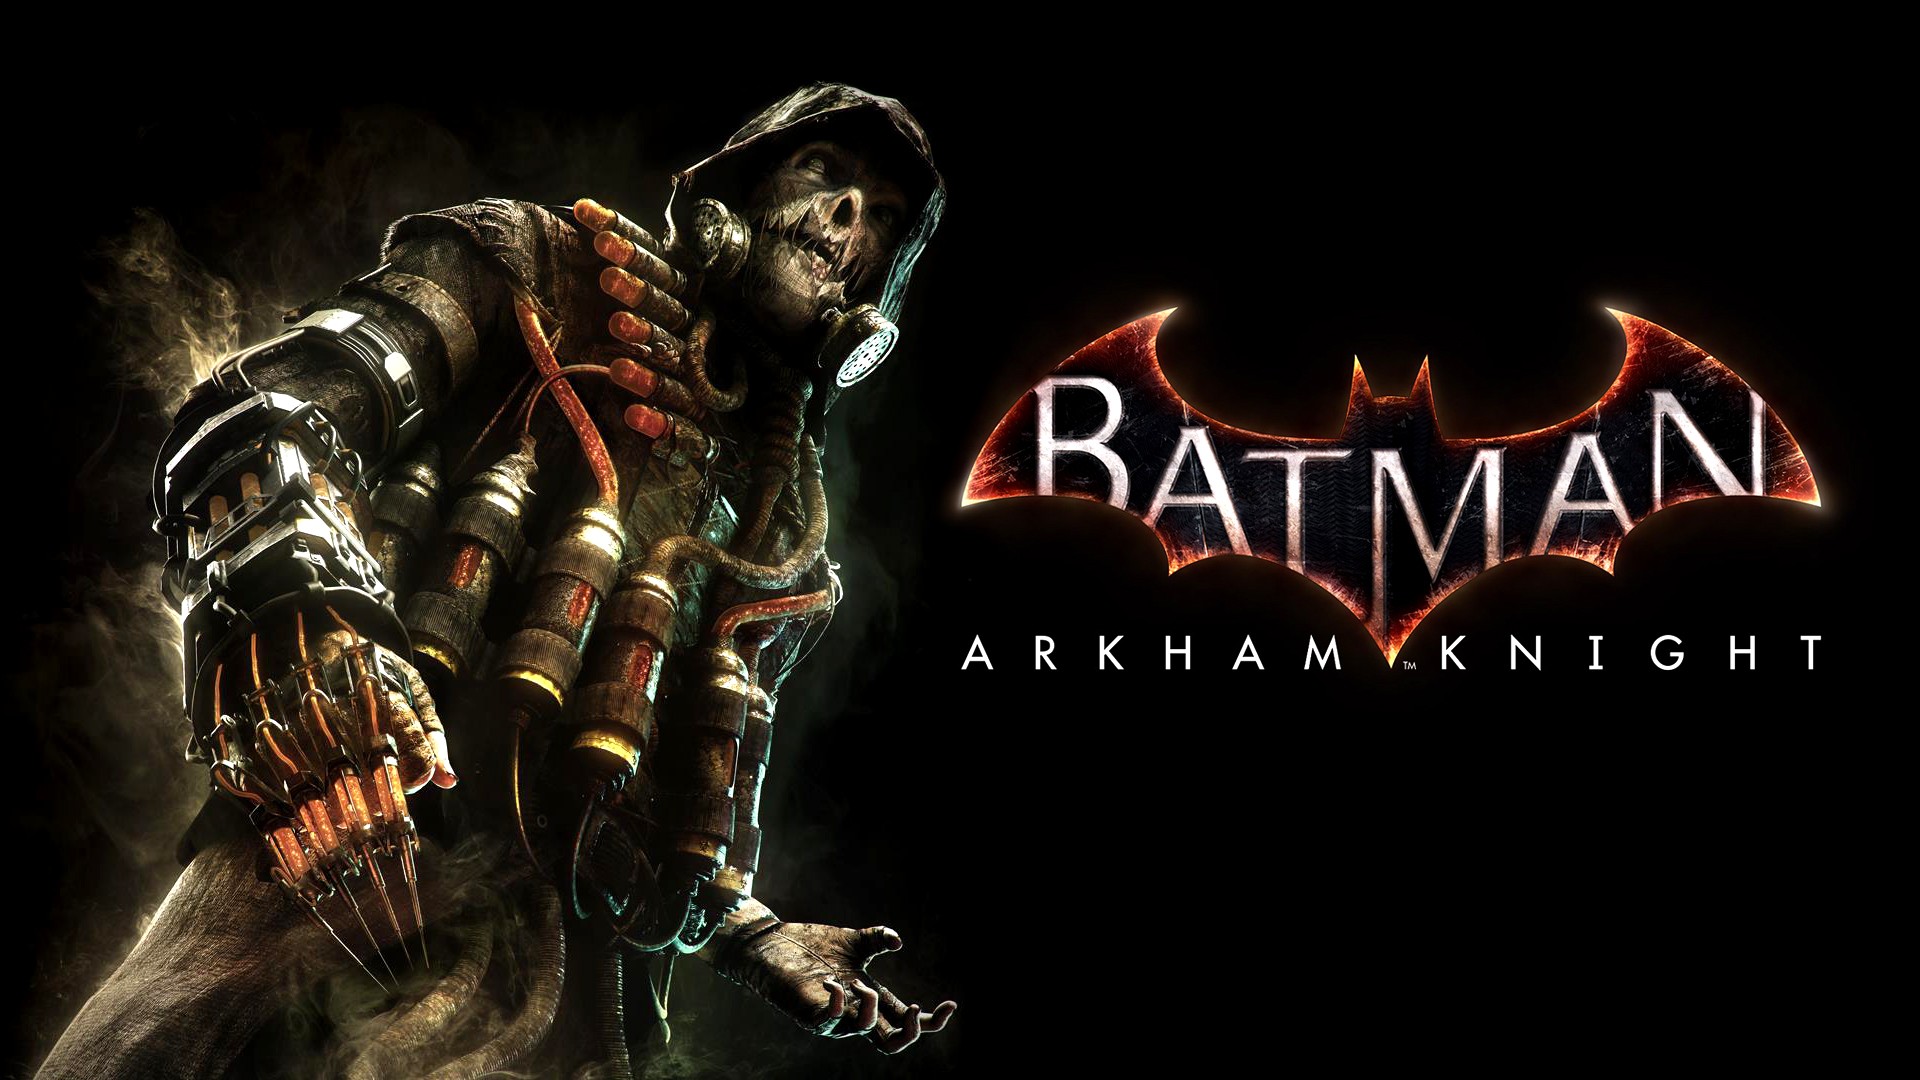 Descarga gratuita de fondo de pantalla para móvil de Batman: Arkham Knight, Hombre Murciélago, Videojuego.